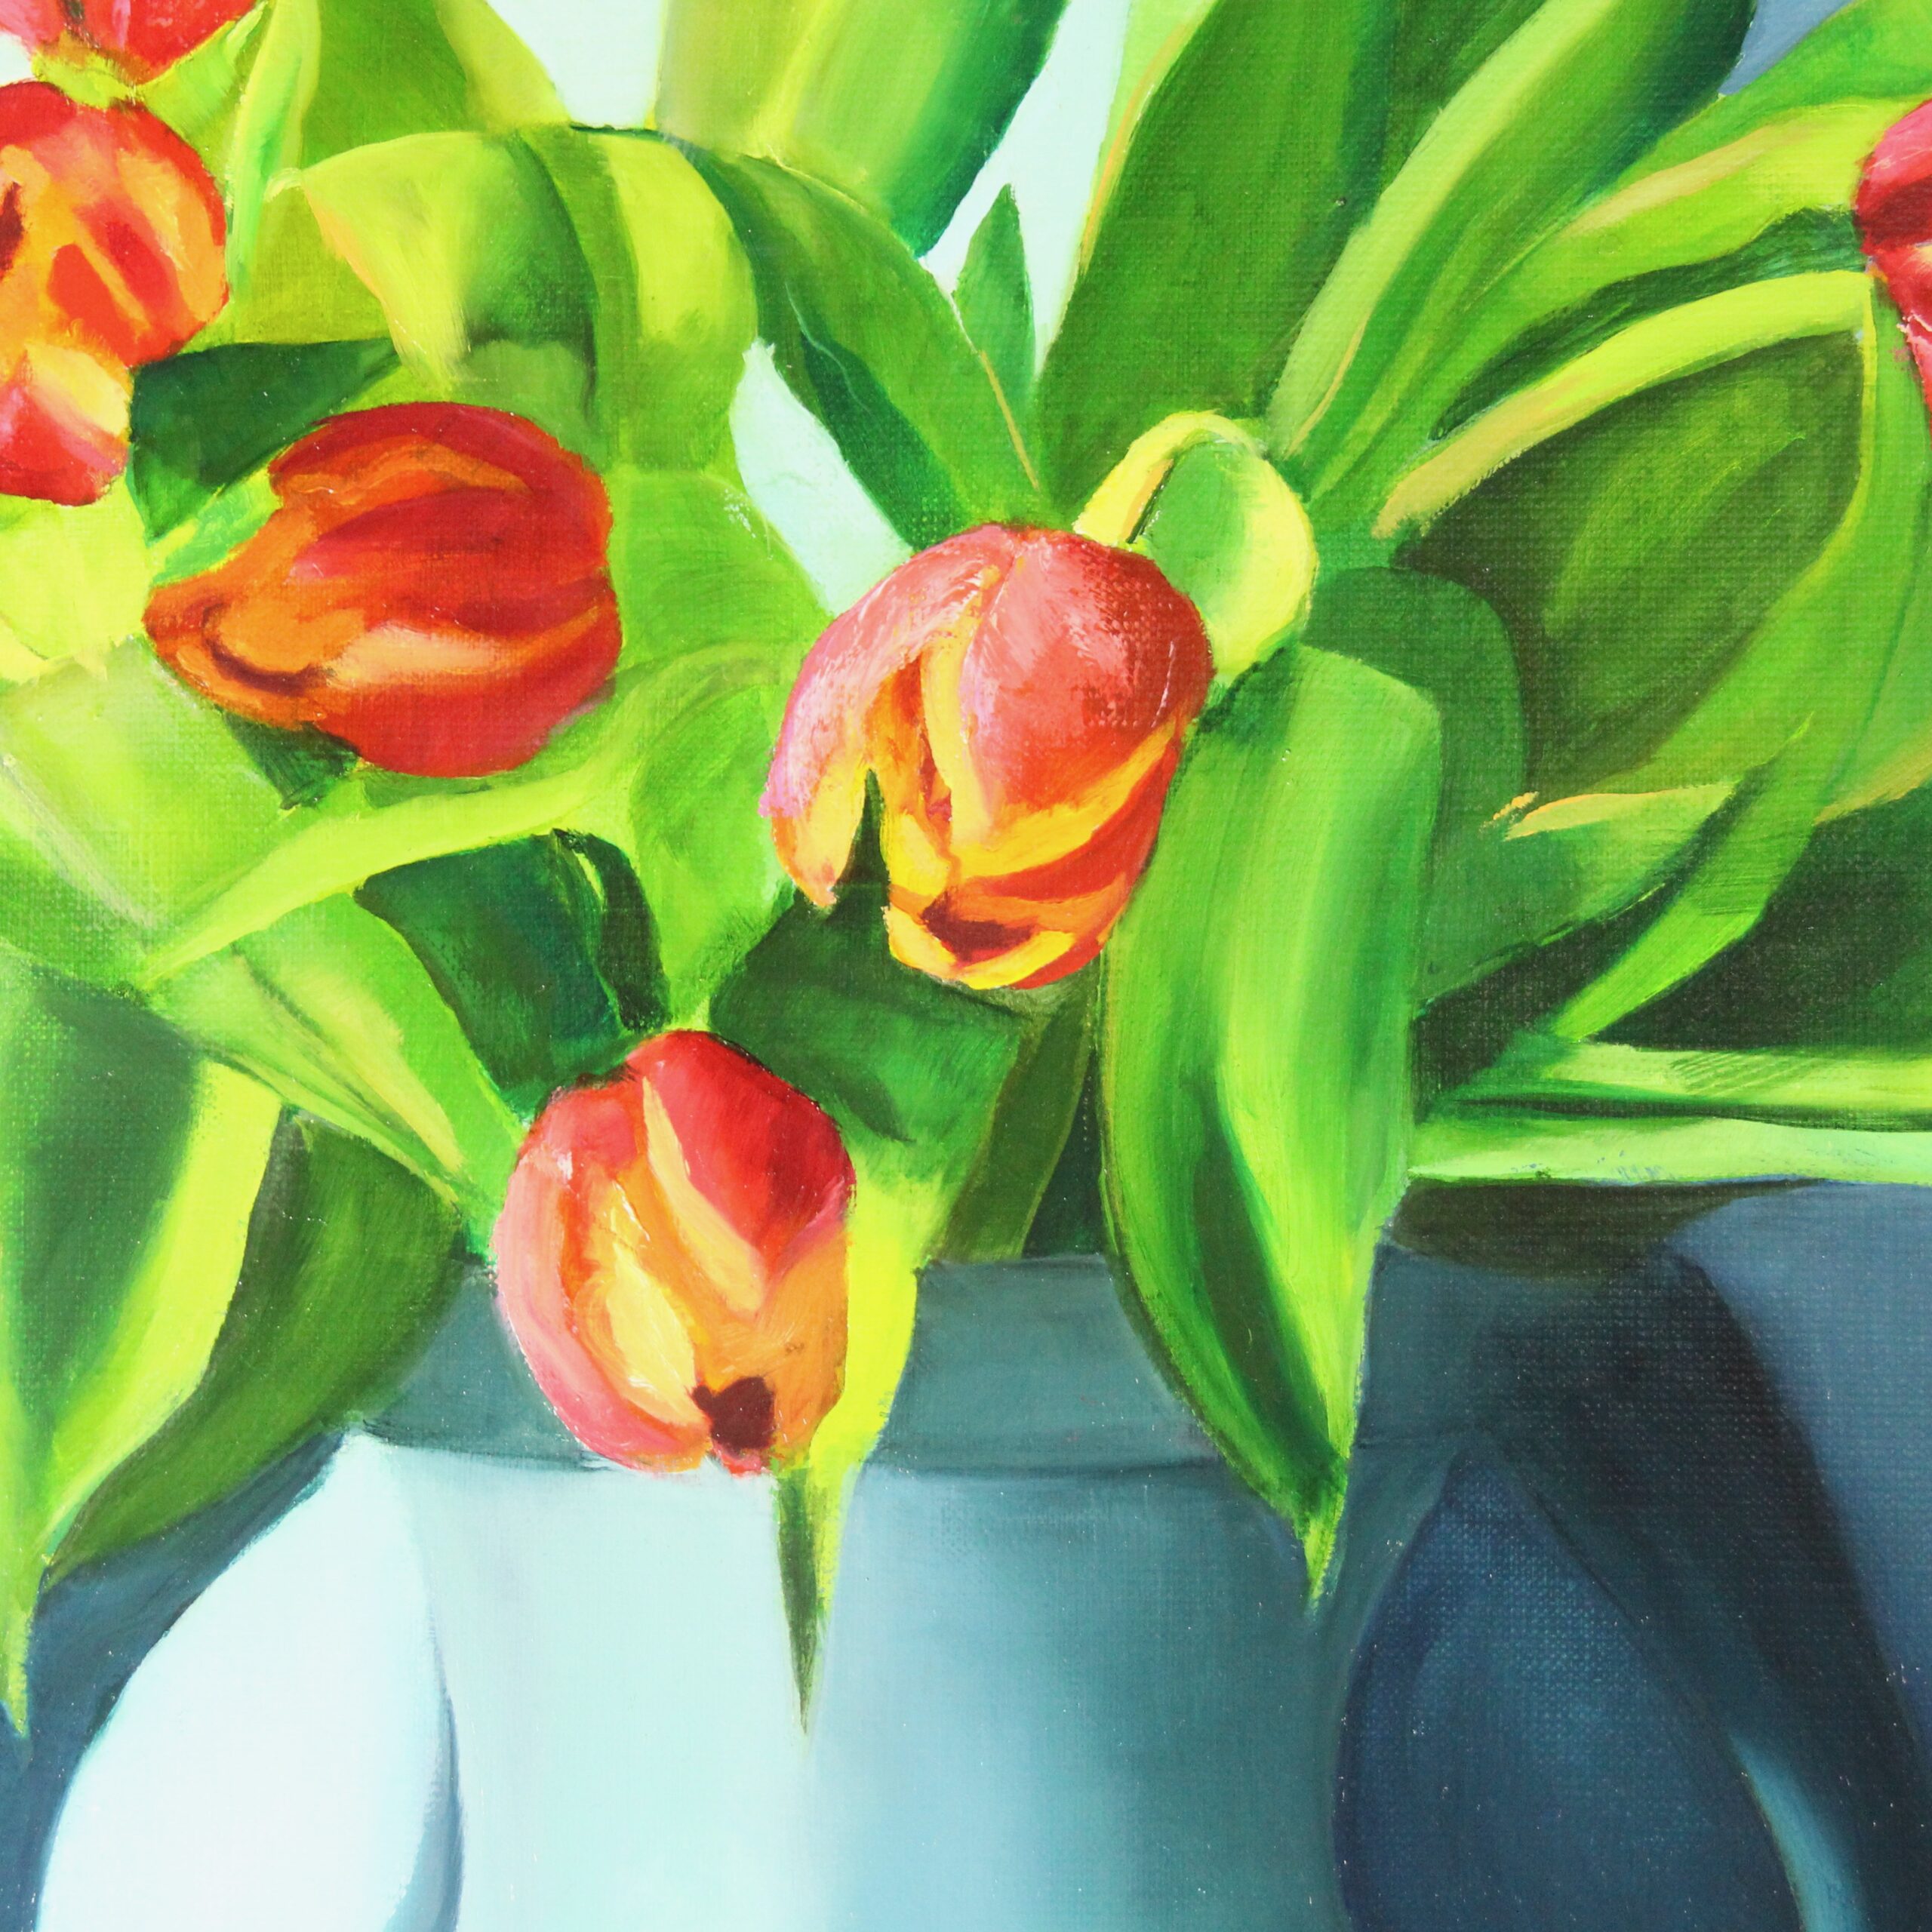 Kunst: Colombo – Vase with Tulips van kunstenaar Minke Buikema